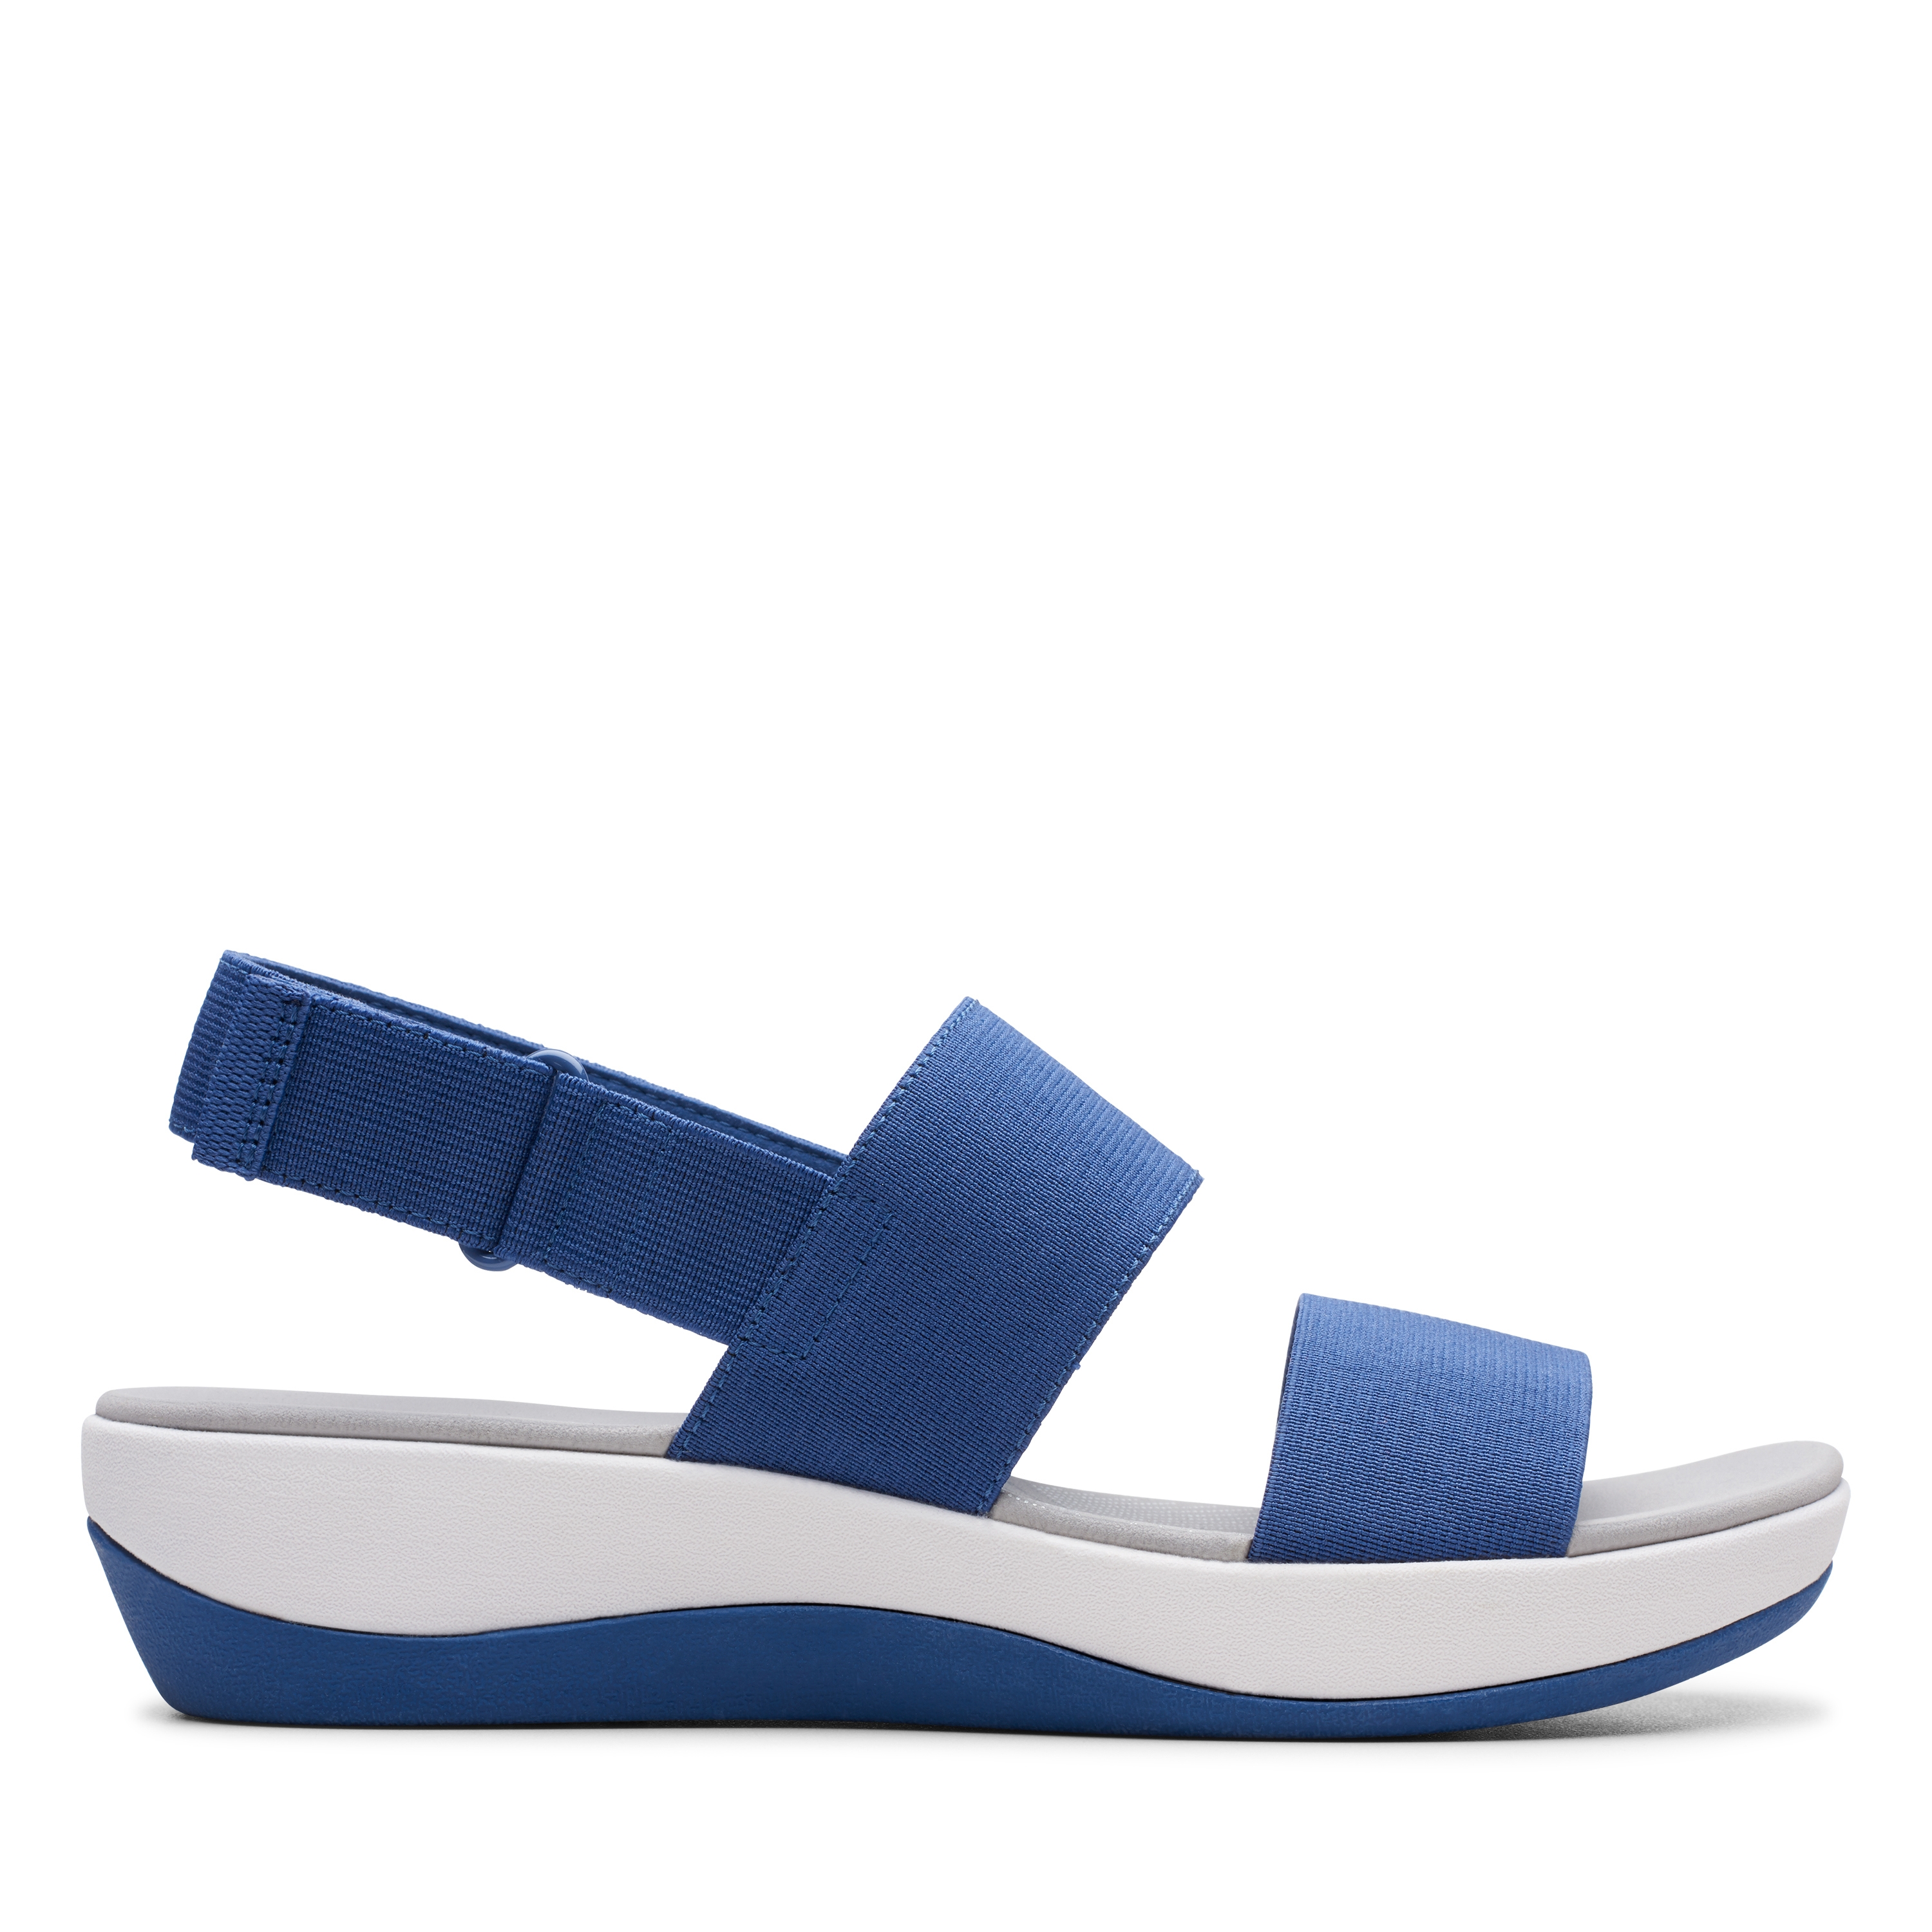 Clarks | Women's Blue Sandals 0